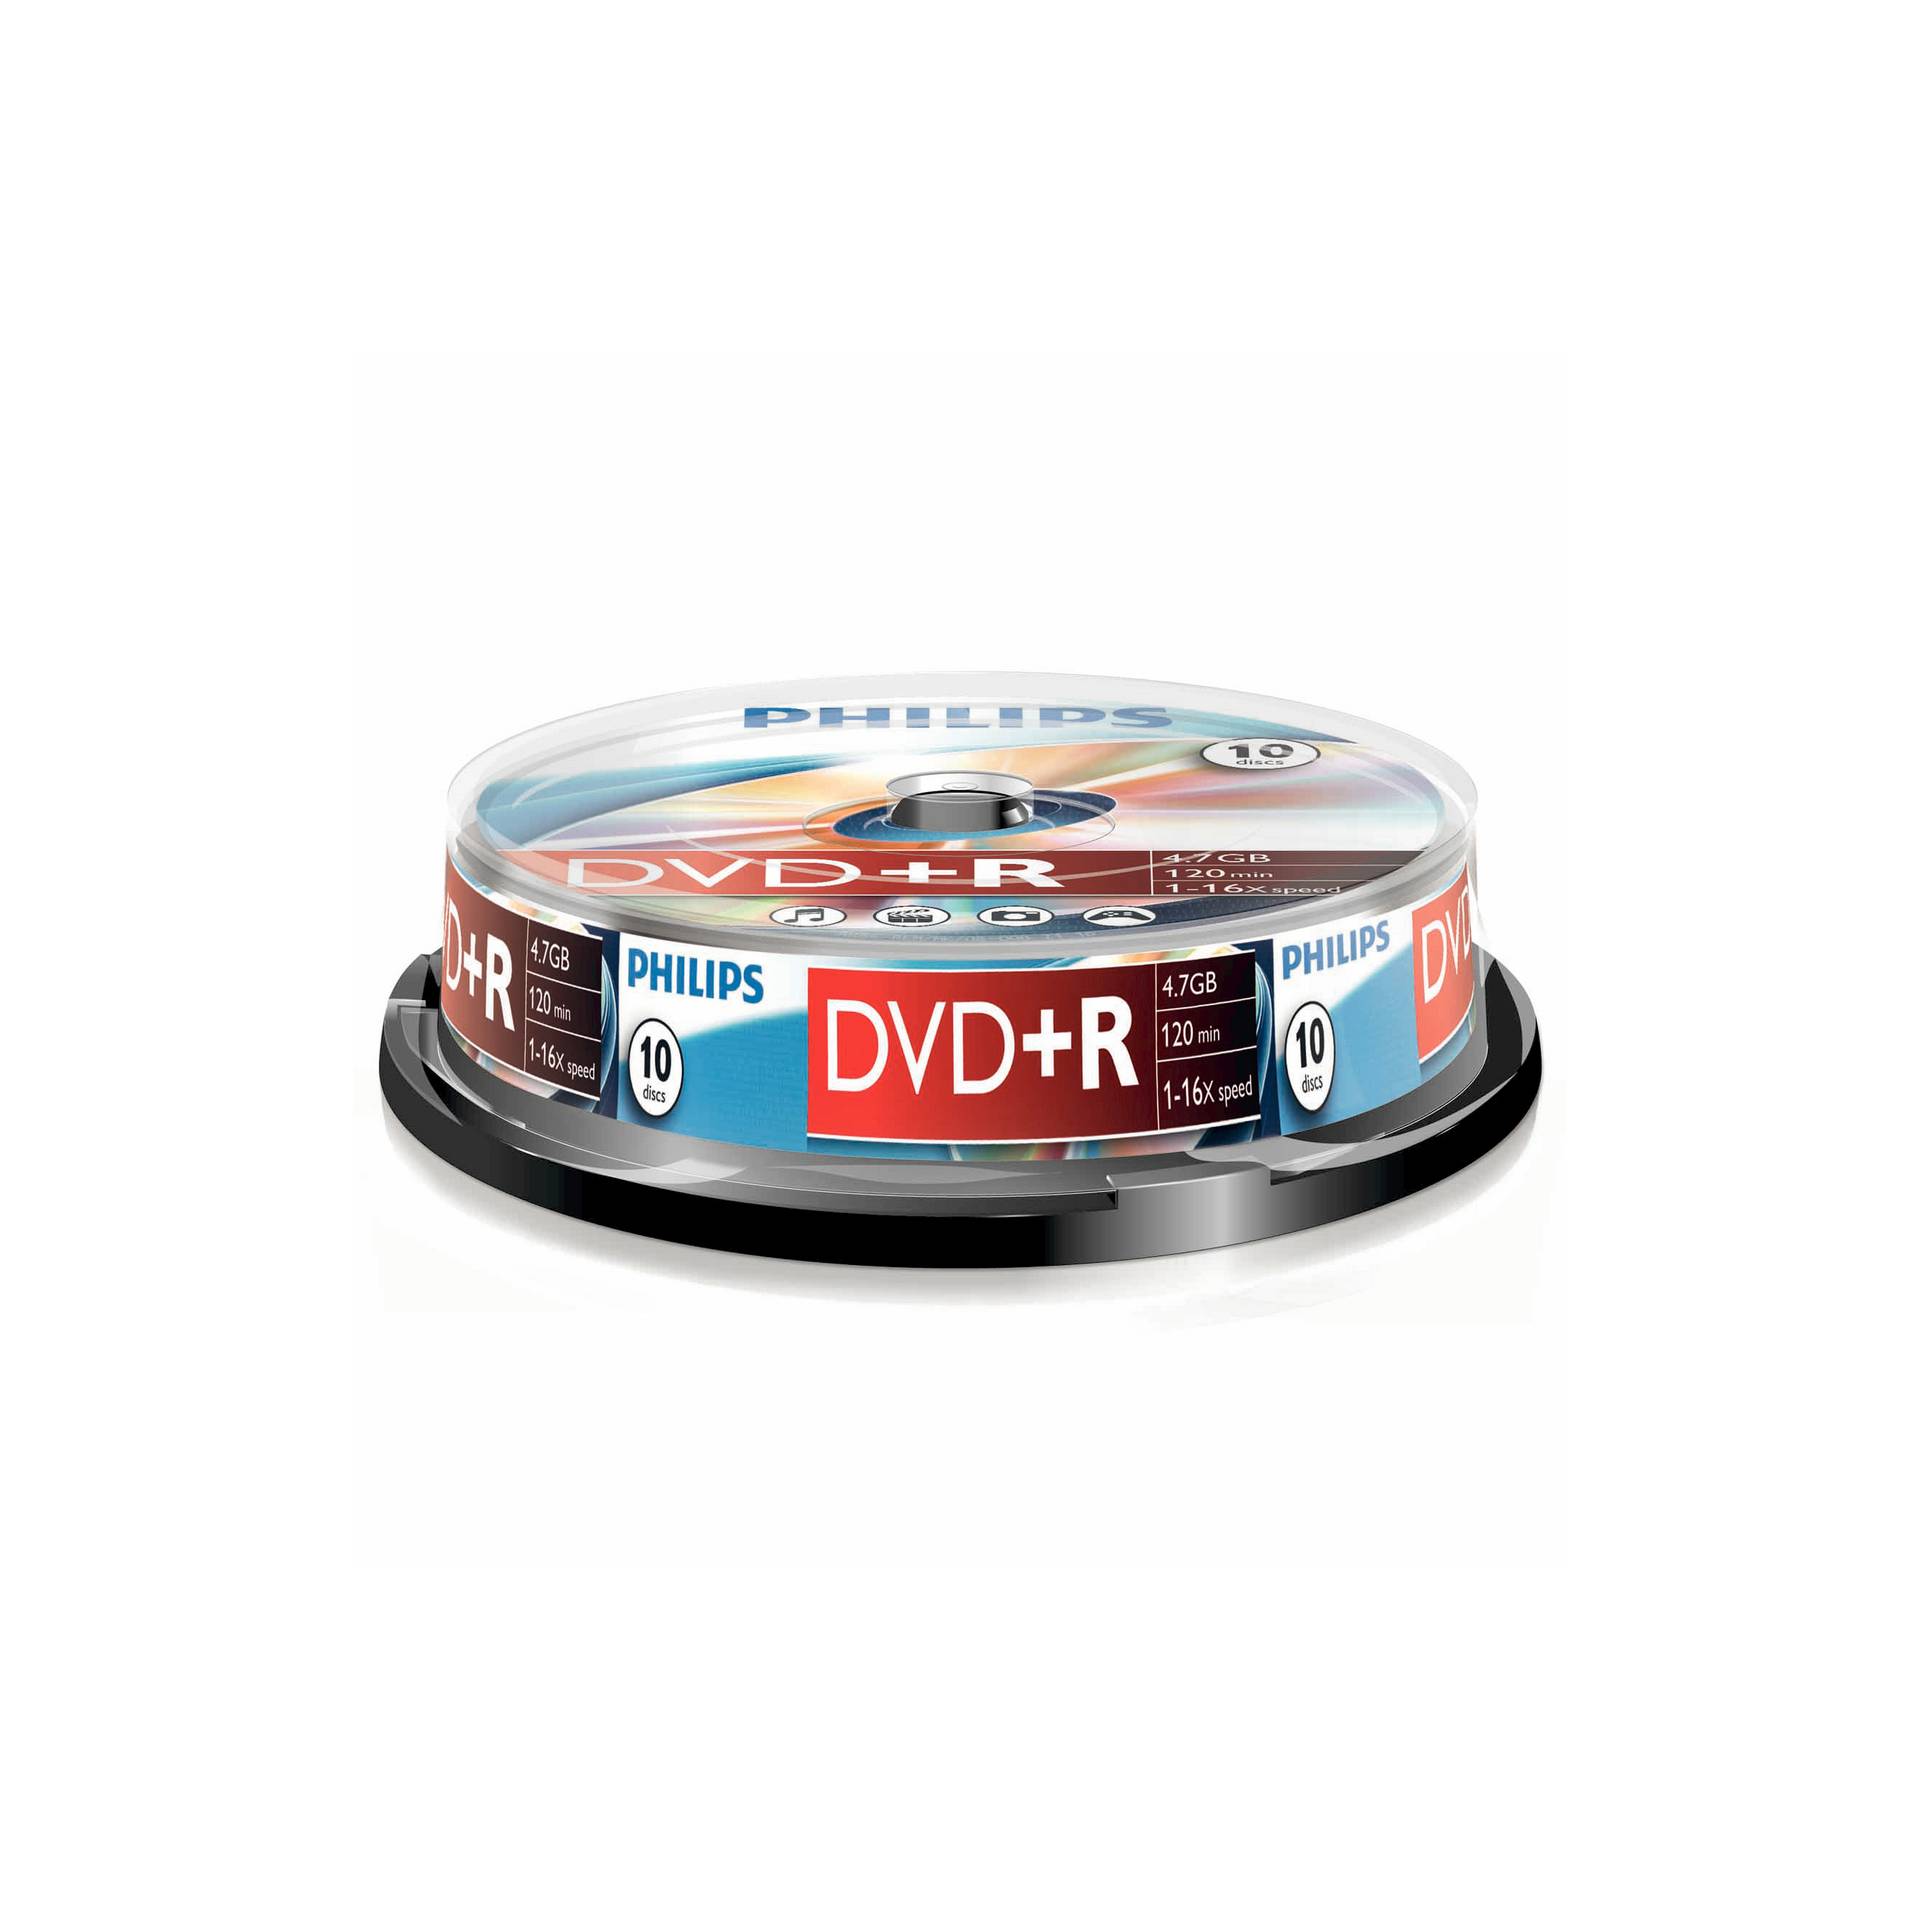 1x10 Philips DVD+R 4,7GB 16x SP